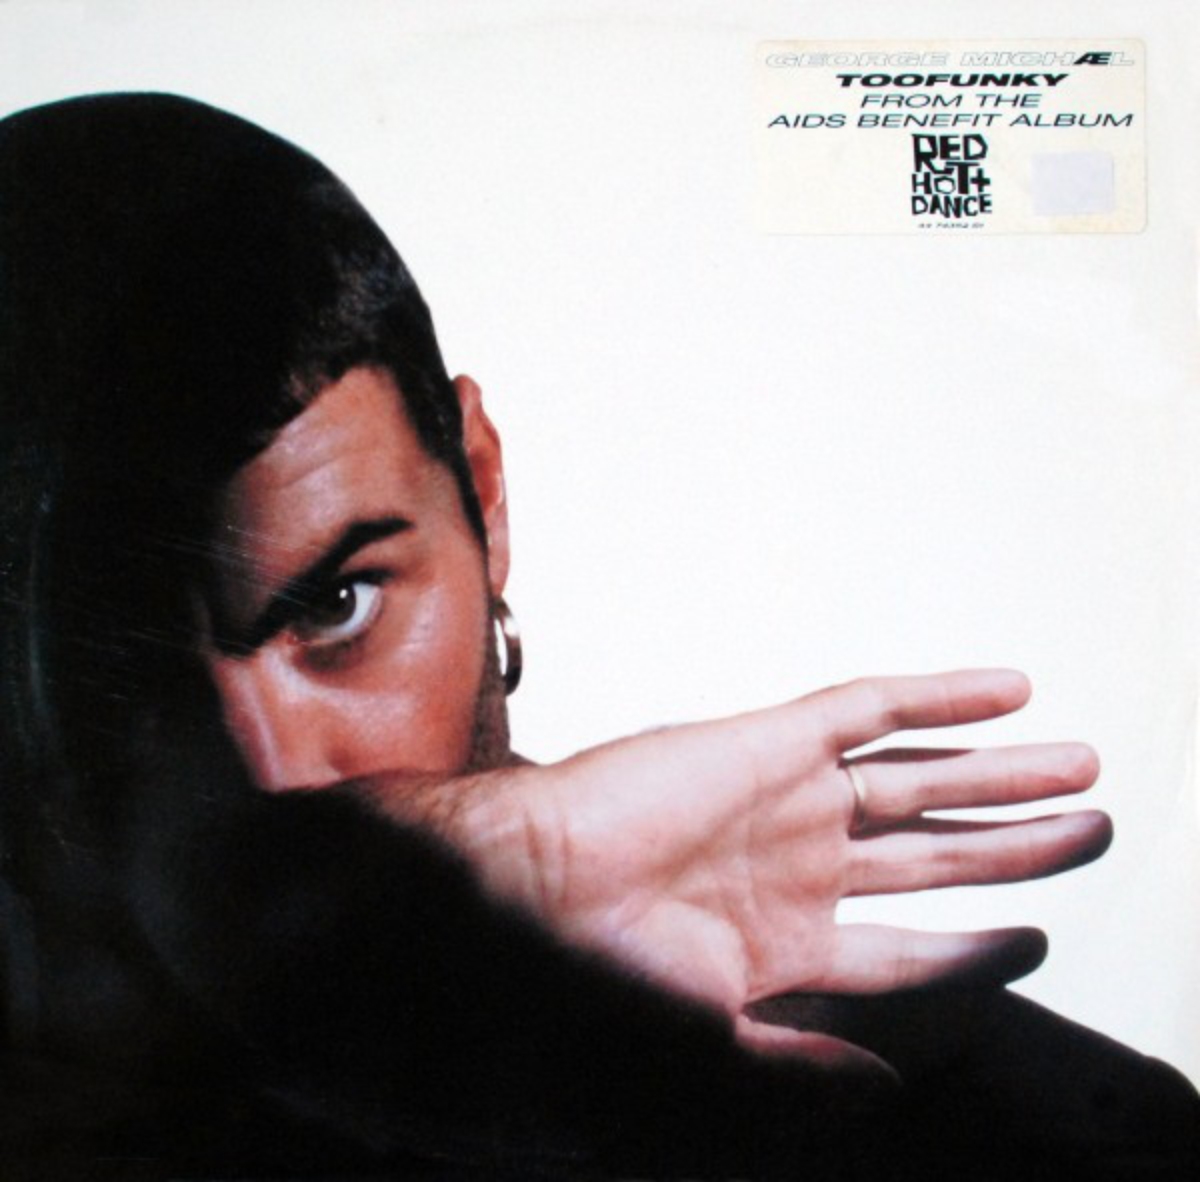 Capa do single "Too Funky" de George Michael